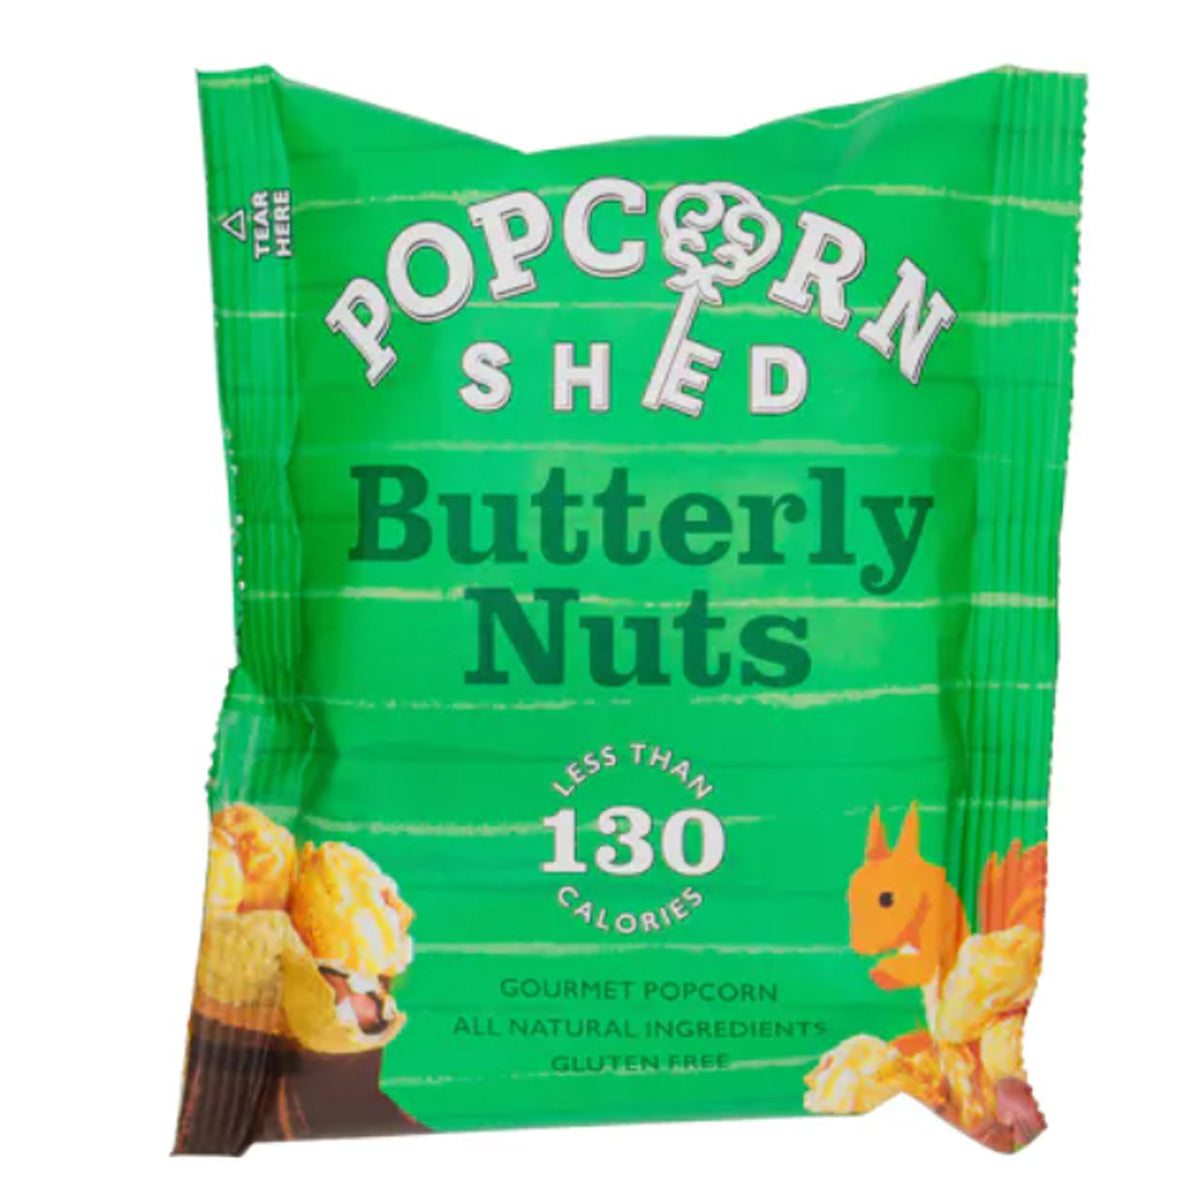 Popcorn Butterly Nuts Pindakaas smaak